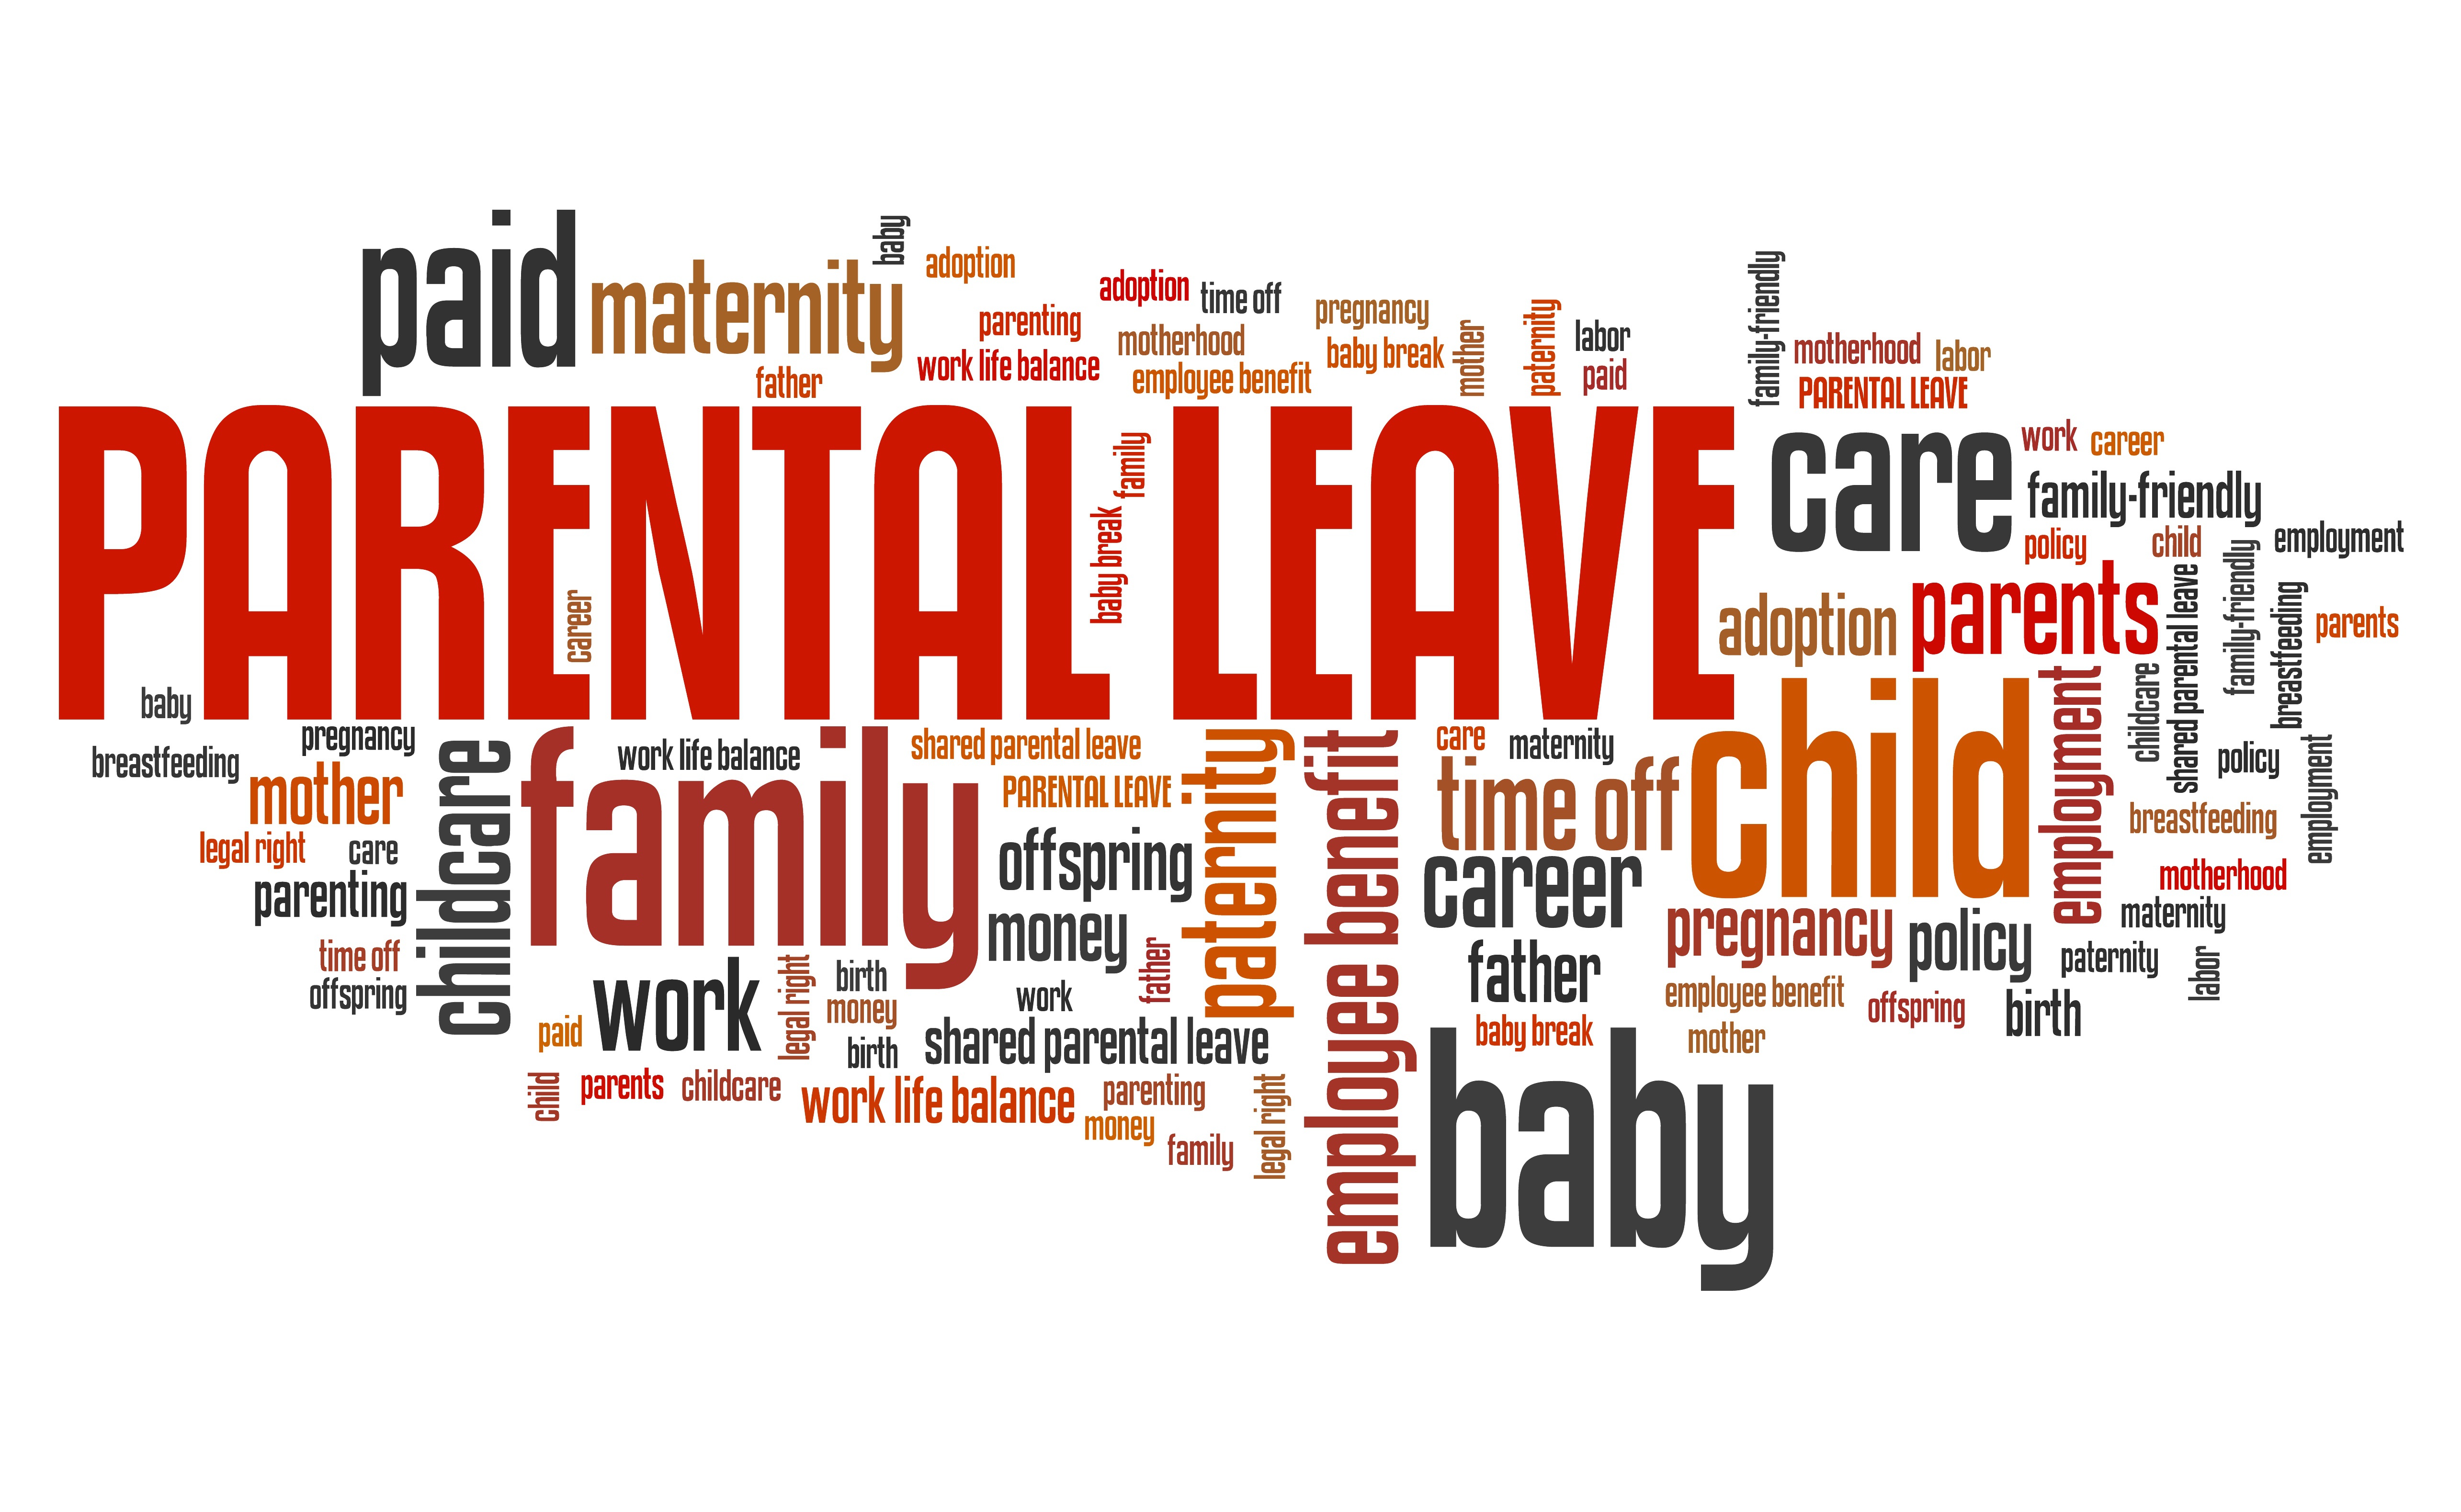 paternity leave benefits